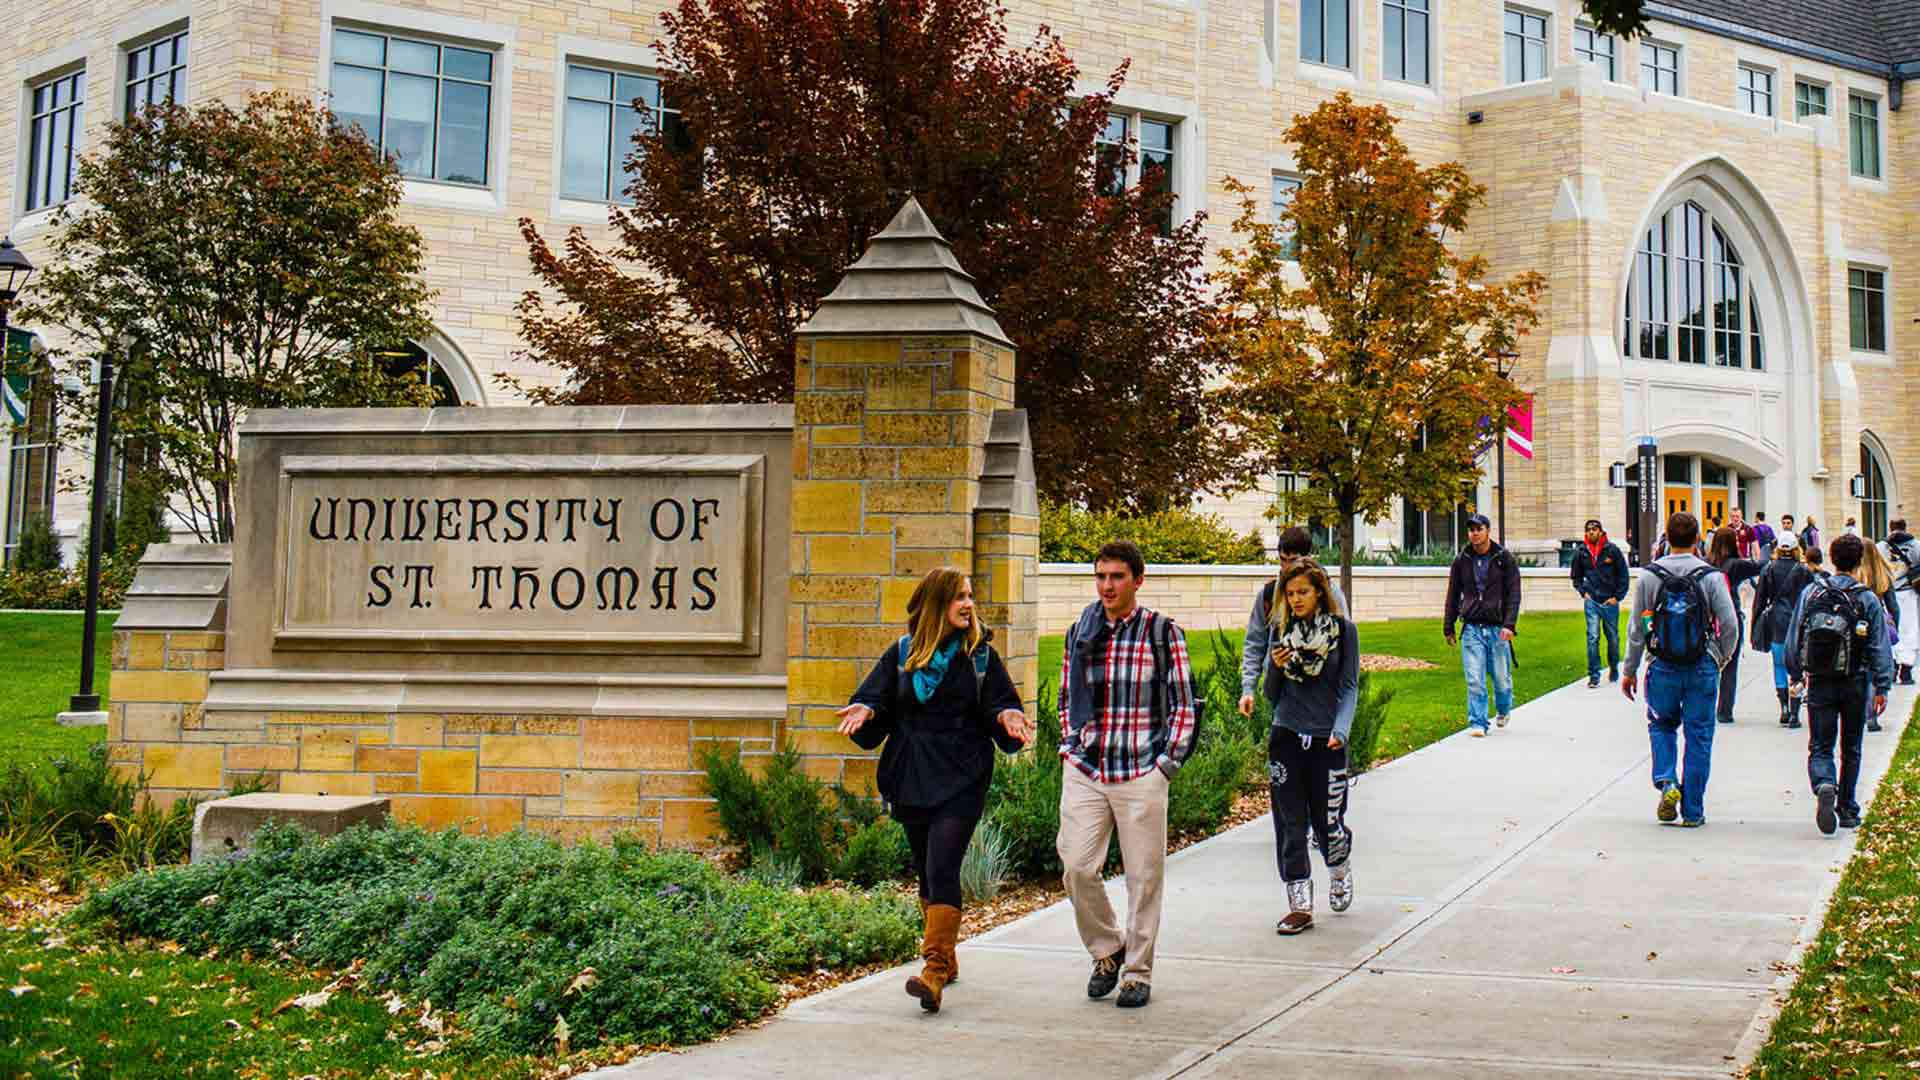 Students walk past a "University of St. Thomas" monumental sign.